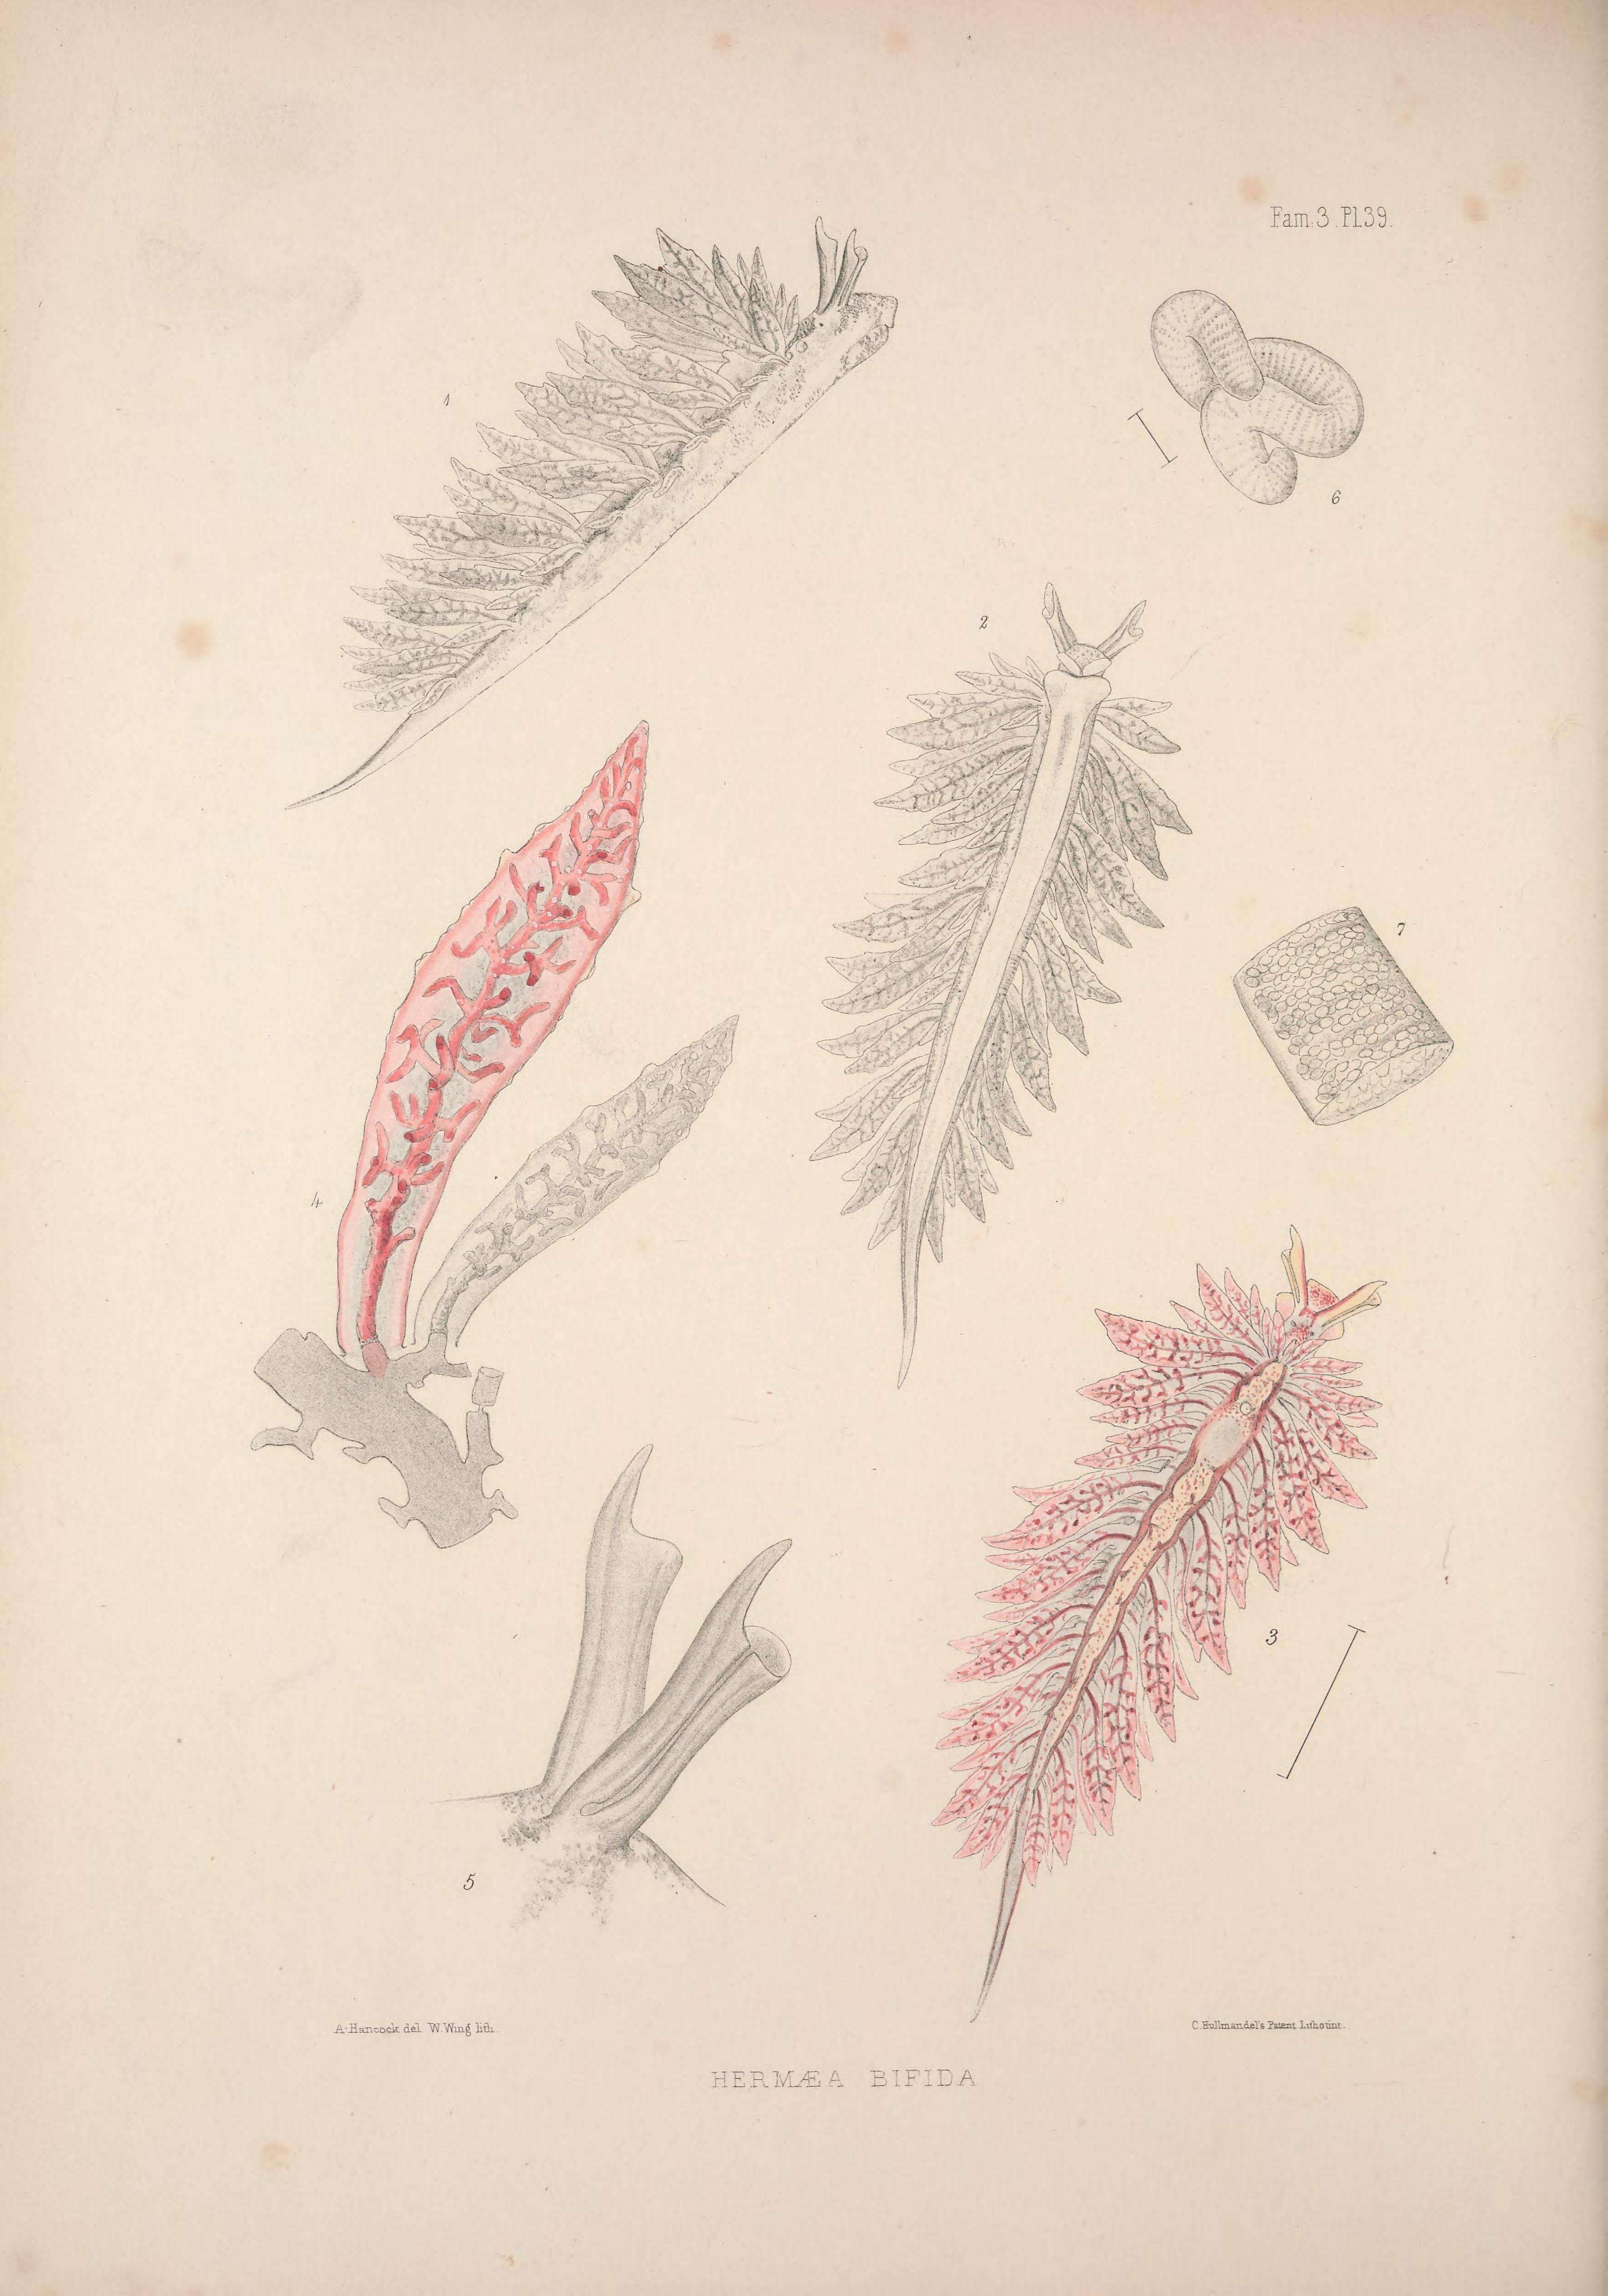 Image of Hermaea bifida (Montagu 1816)